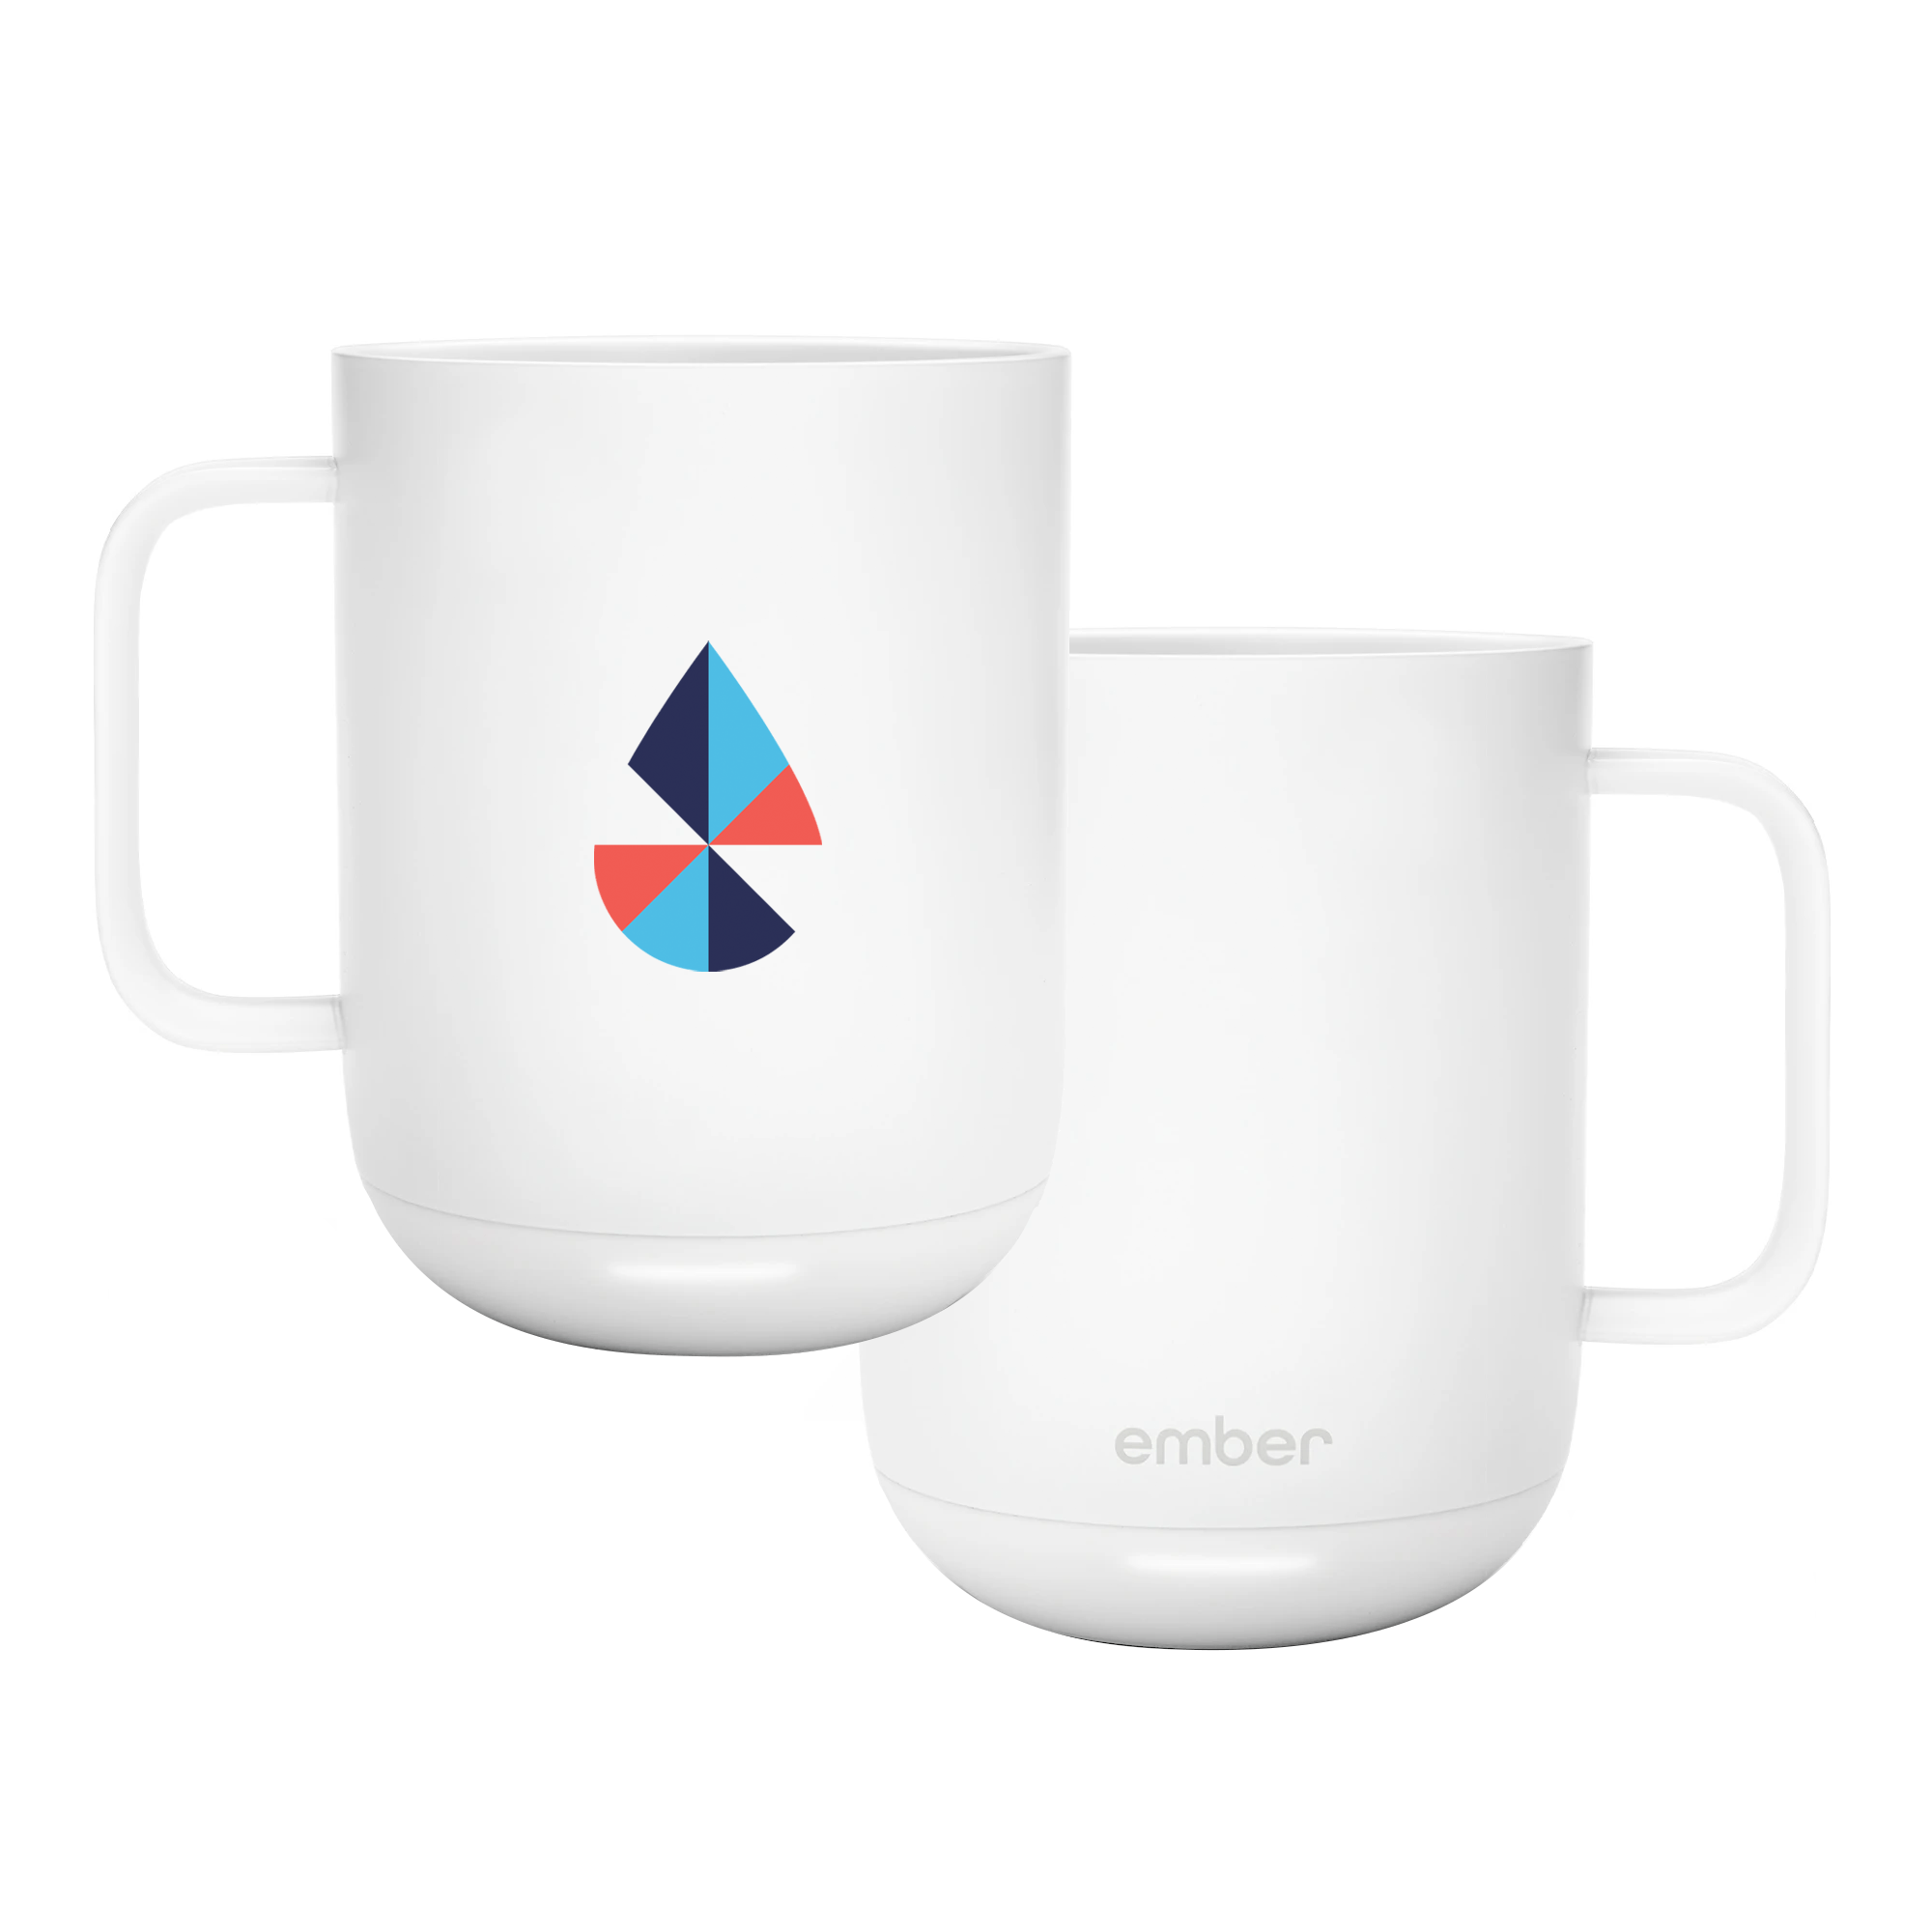 ember mug, high-end client gifts